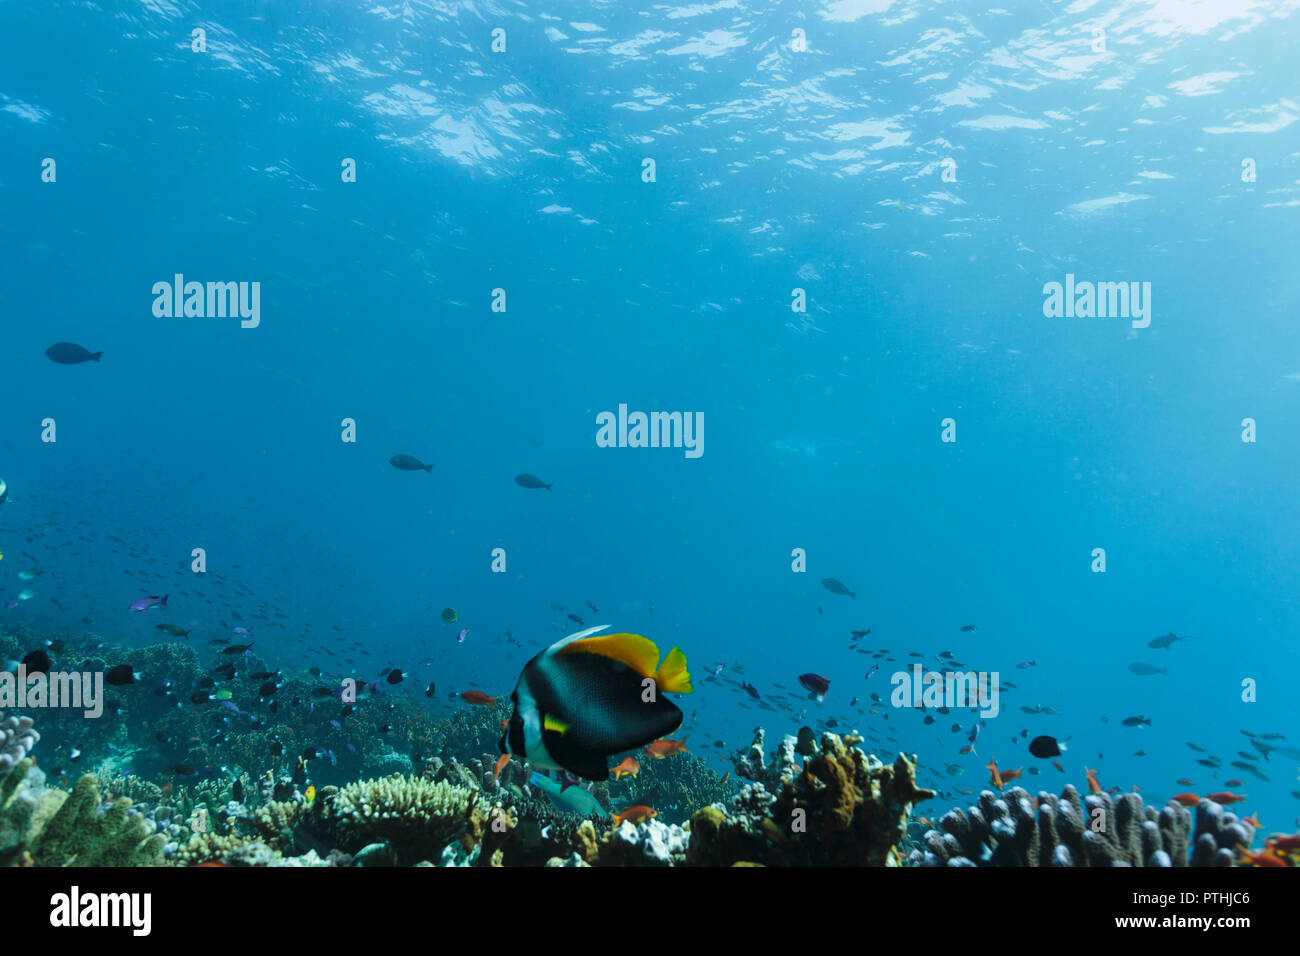 Pesce tropicale nuoto sott'acqua tra il reef in oceano idilliaco, Vava'u, Tonga, Oceano Pacifico Foto Stock